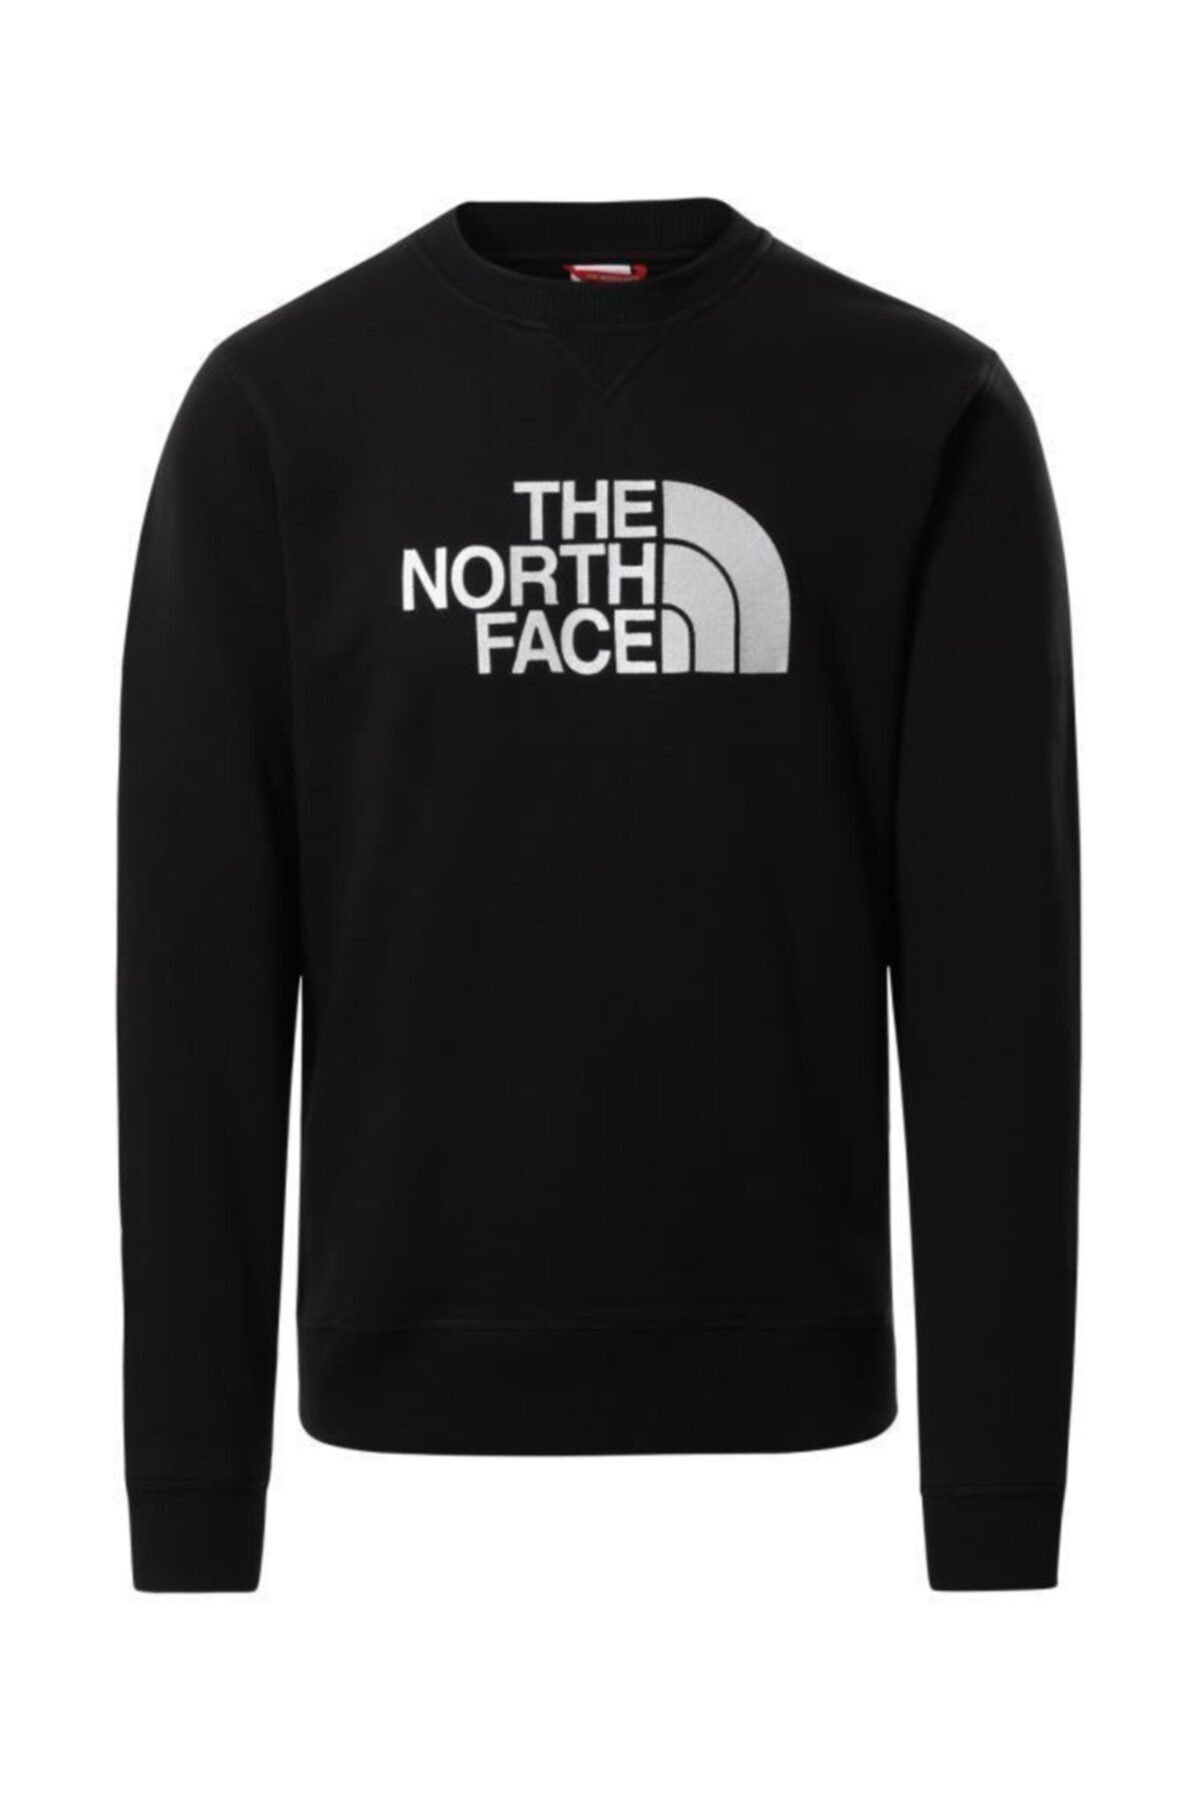 The North Face Drew Peak Crew Erkek Sweatshirt Siyah